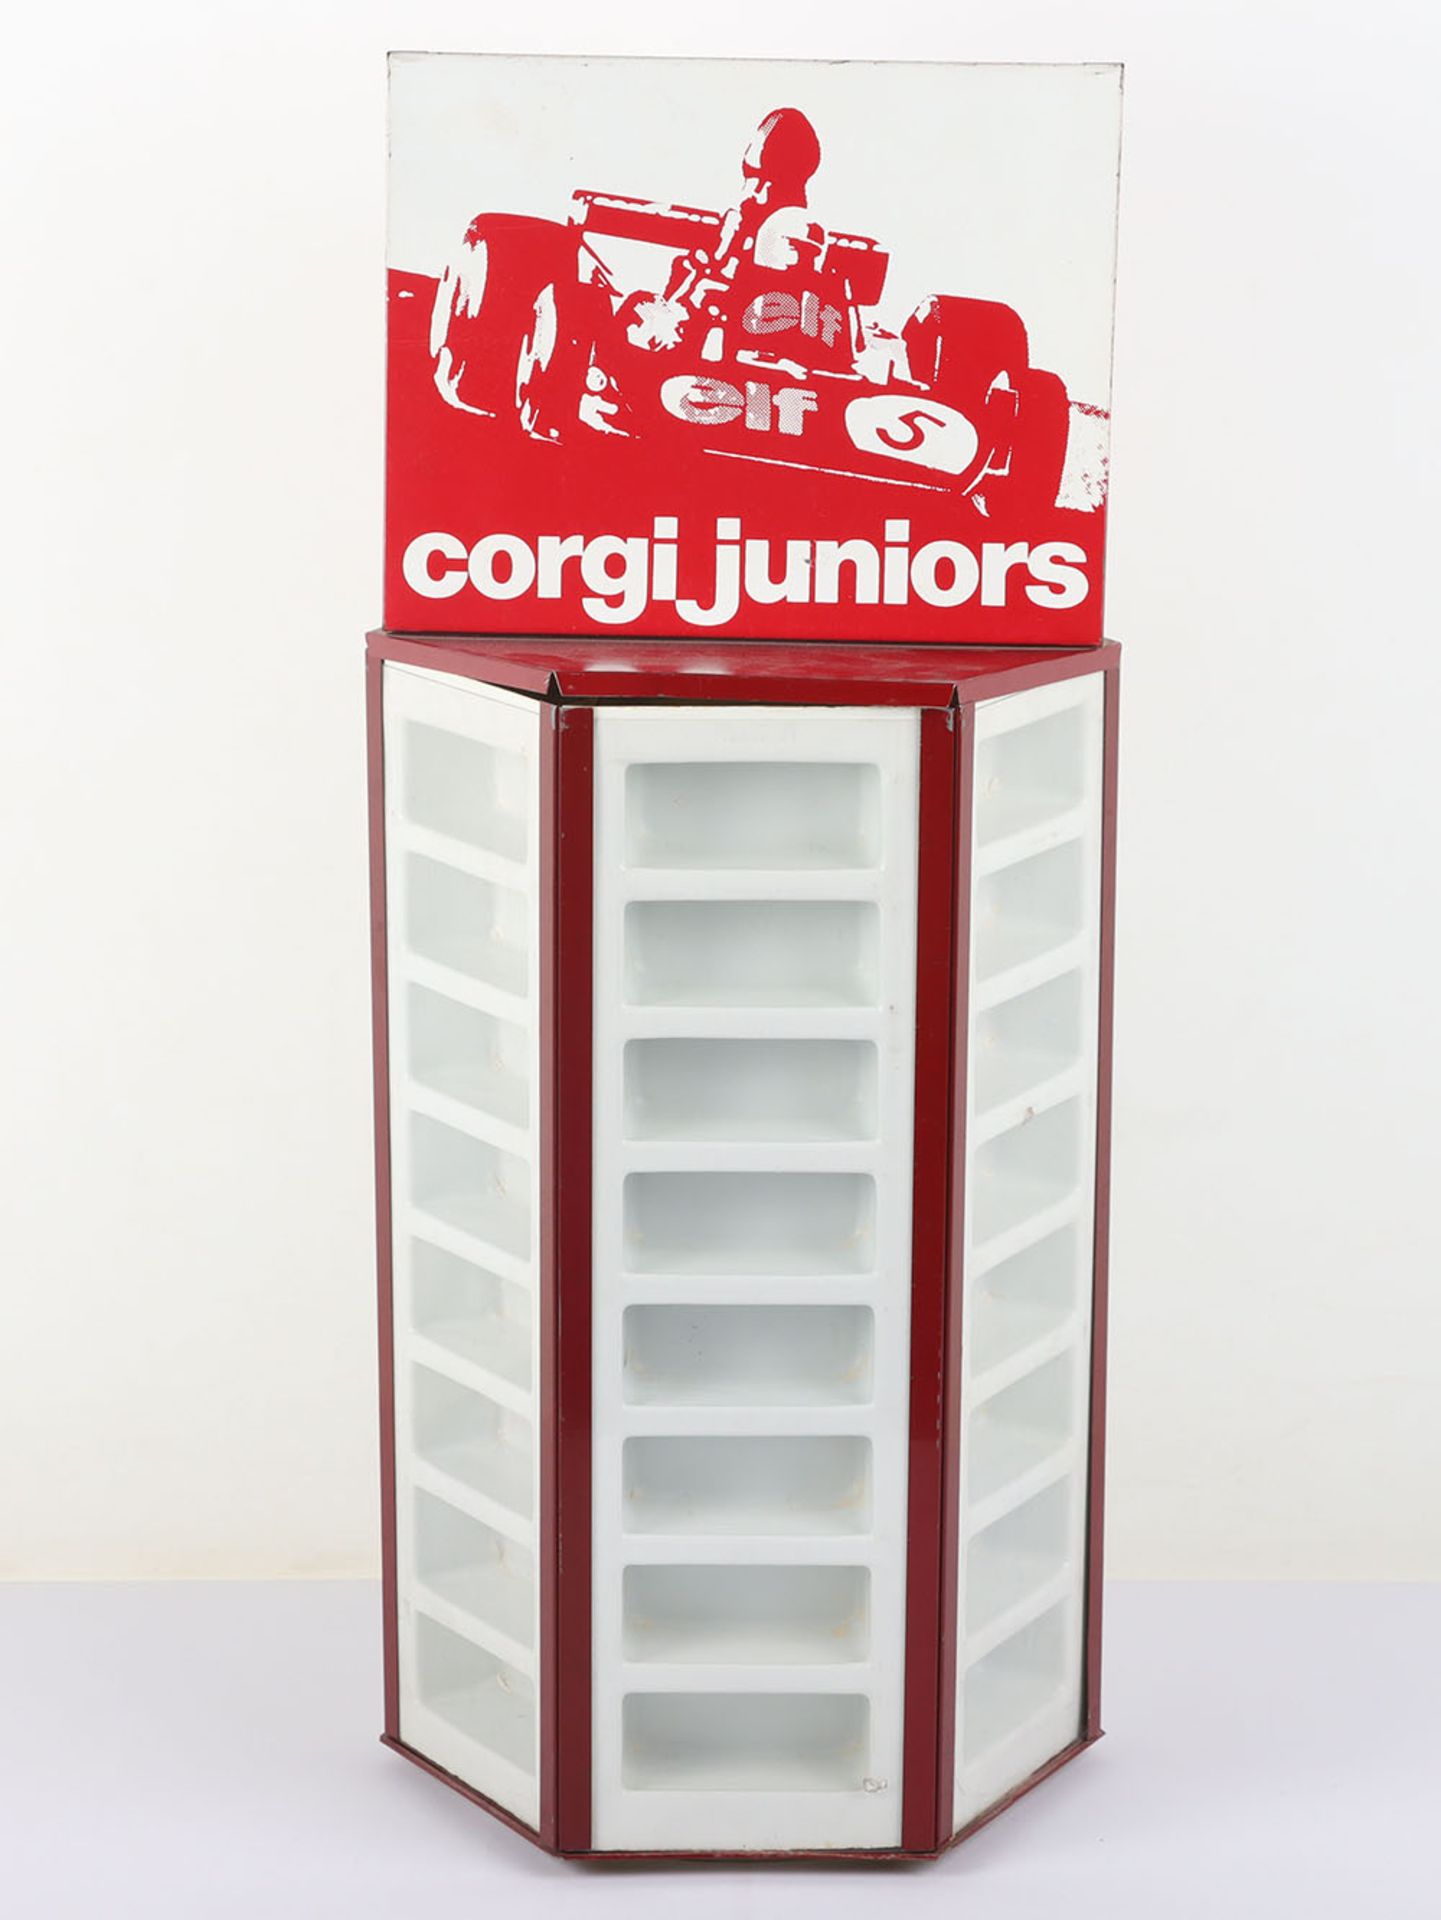 Corgi Juniors Shop Display Hexagonal Rotating Stand